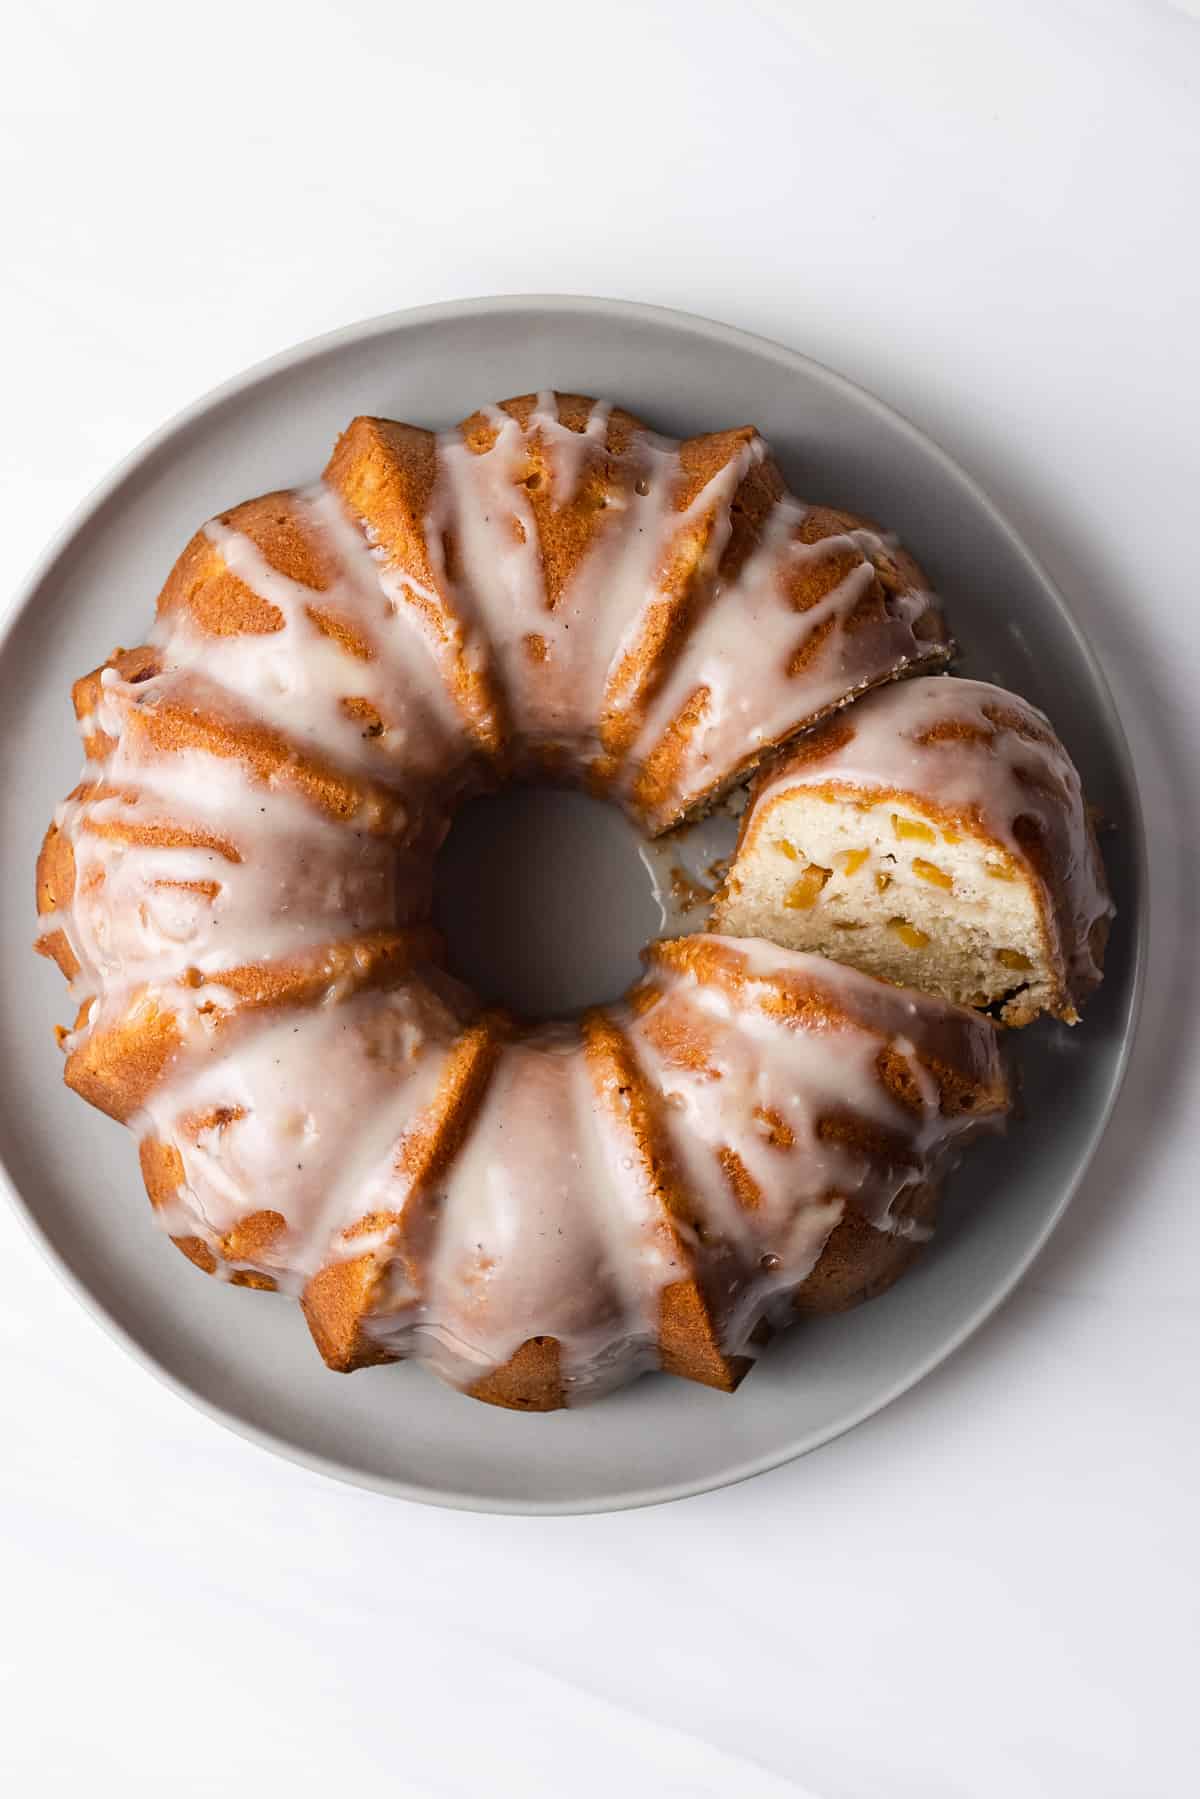 A peach pound cake with glaze over the top